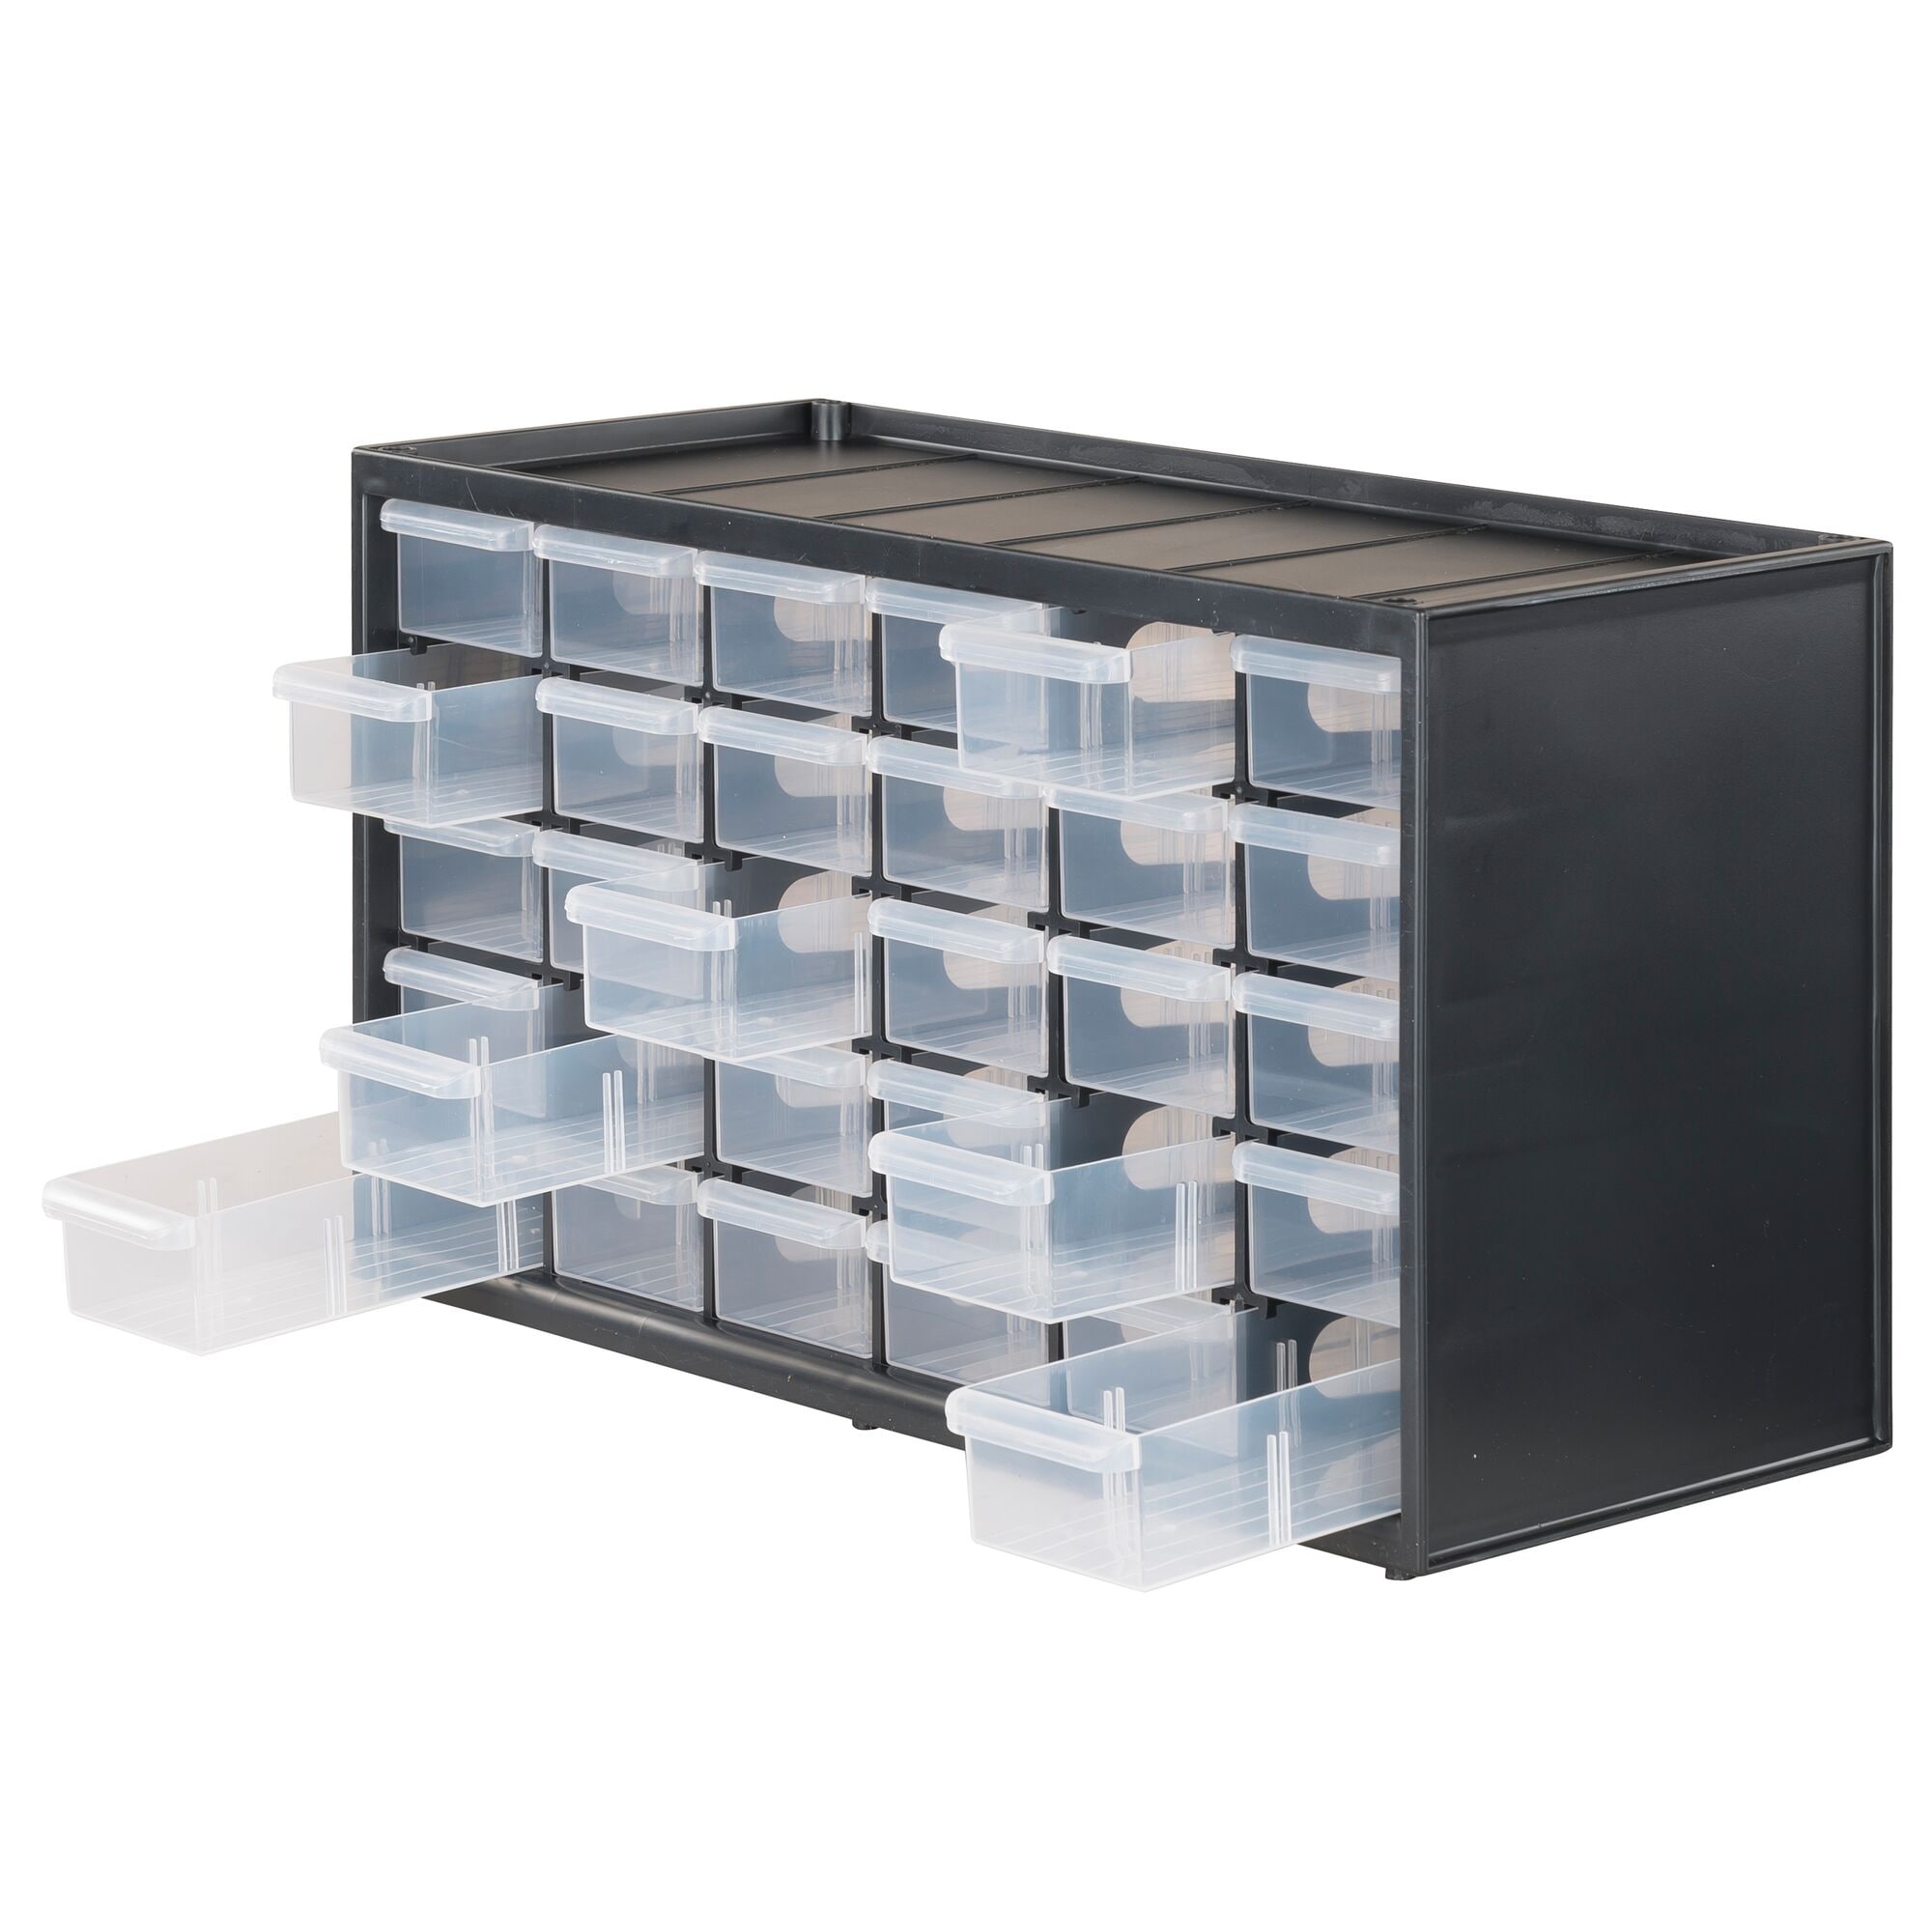 Storage Organizer, Large & Small 39 Drawer Bin Modular Storage System